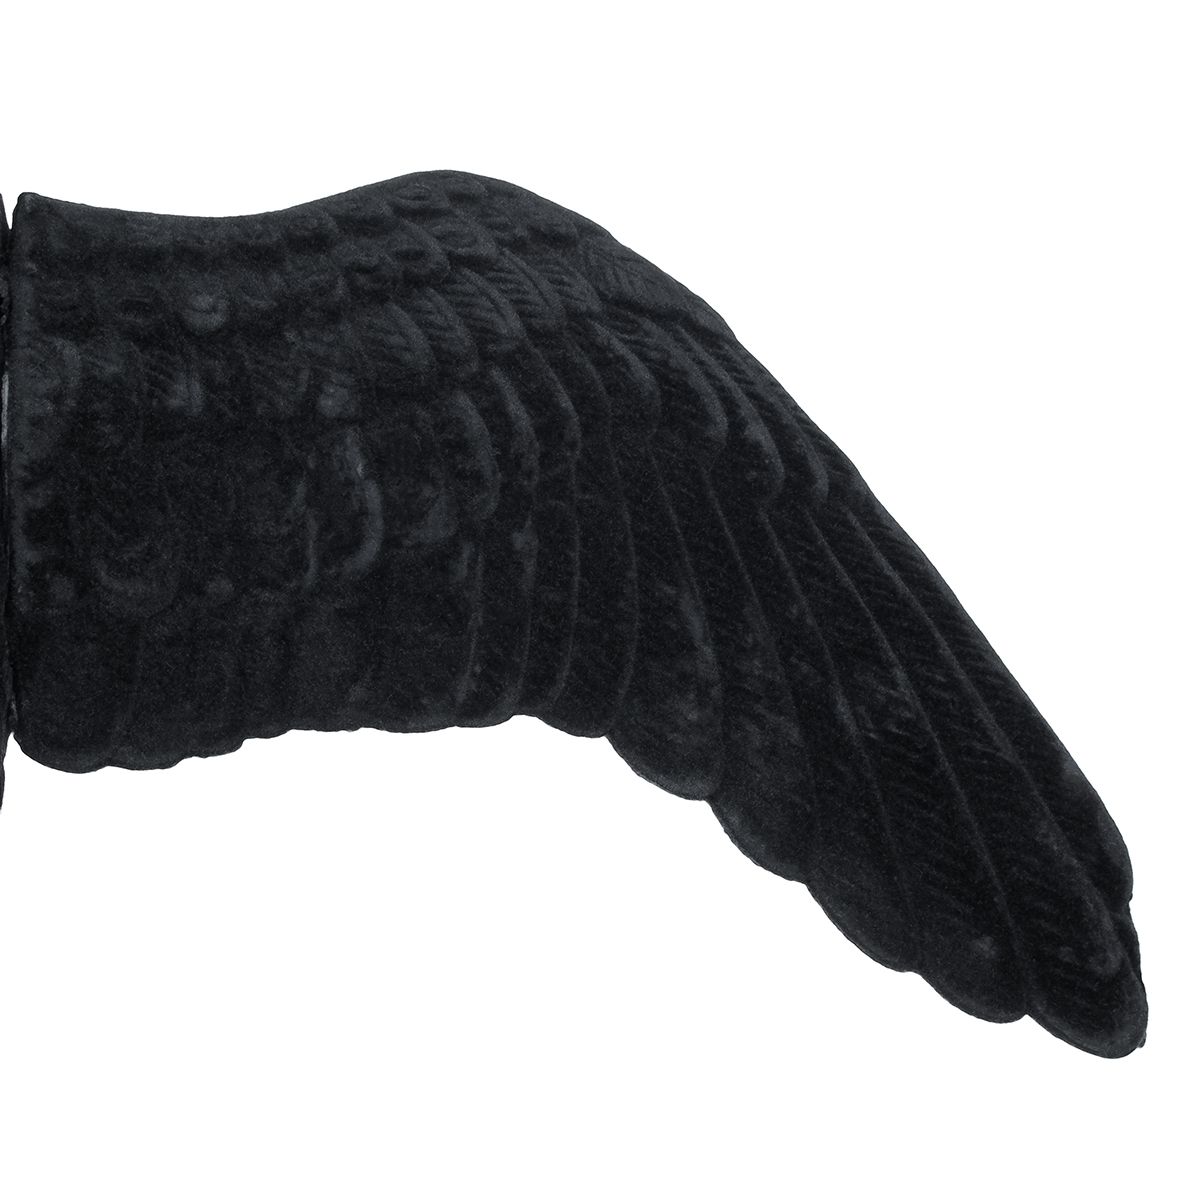 Crow-Hunting-Decoy-Scare-Bird-Away-Scarecrow-Realistic-Animal-Scarer-Decoration-1623933